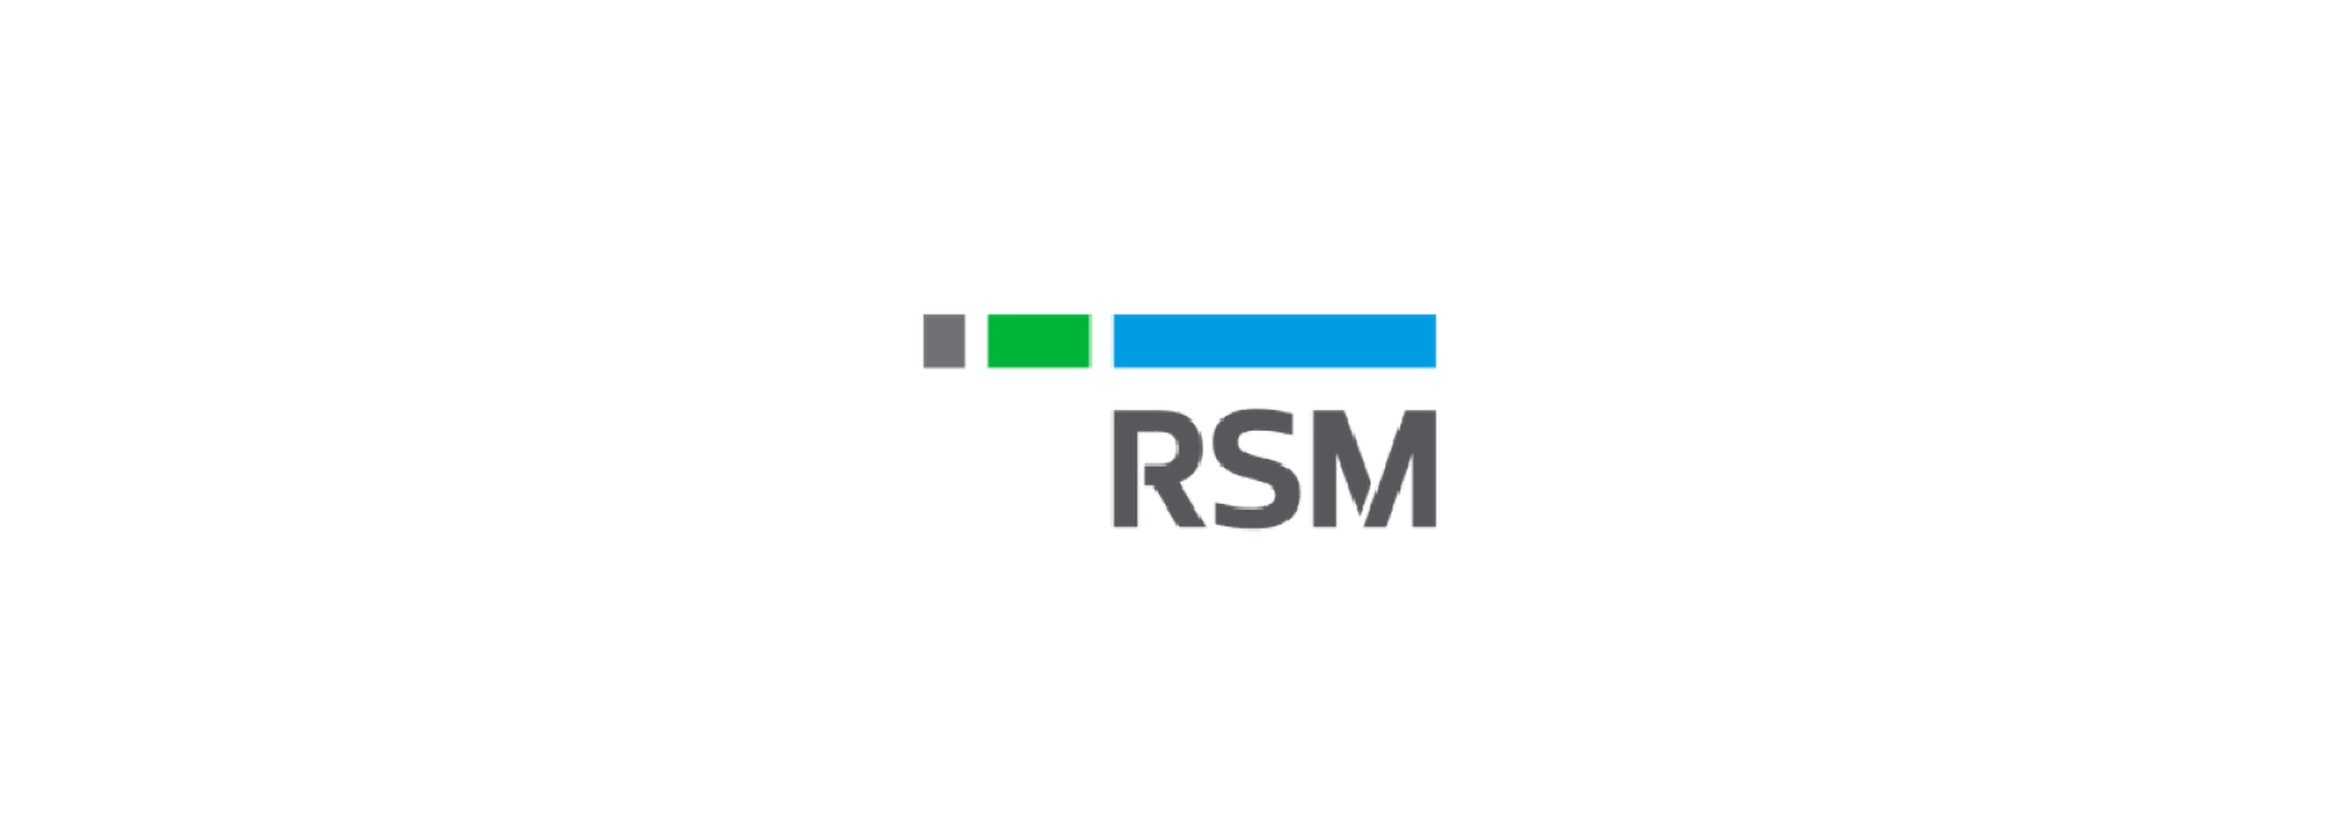 The RSM logo